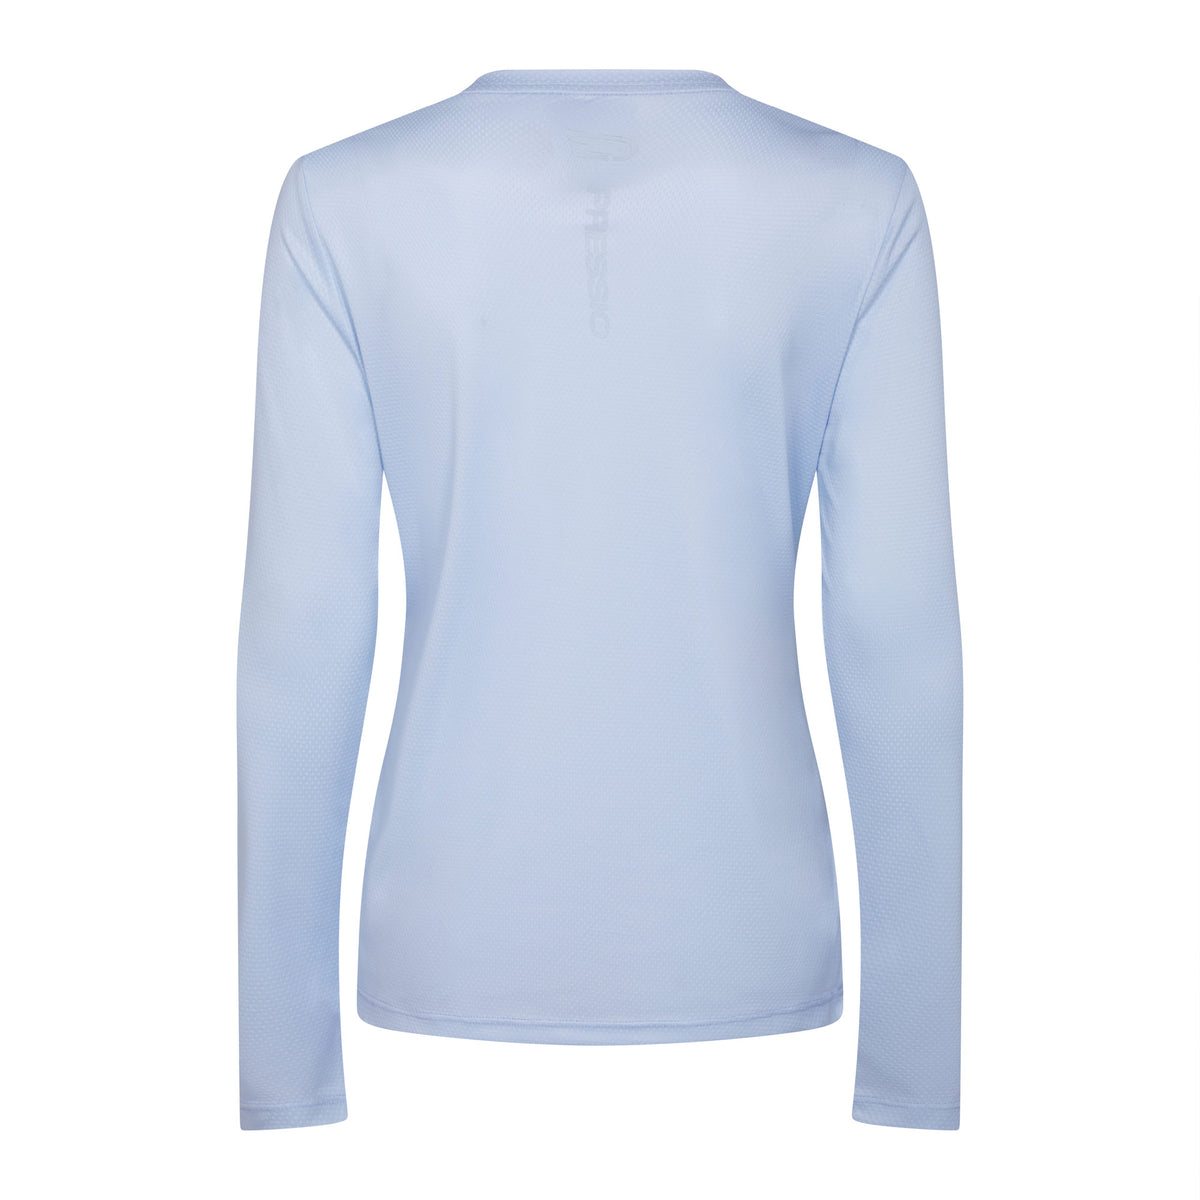 PRESSIO Hāpai Langermet T-skjorte - Lys blå